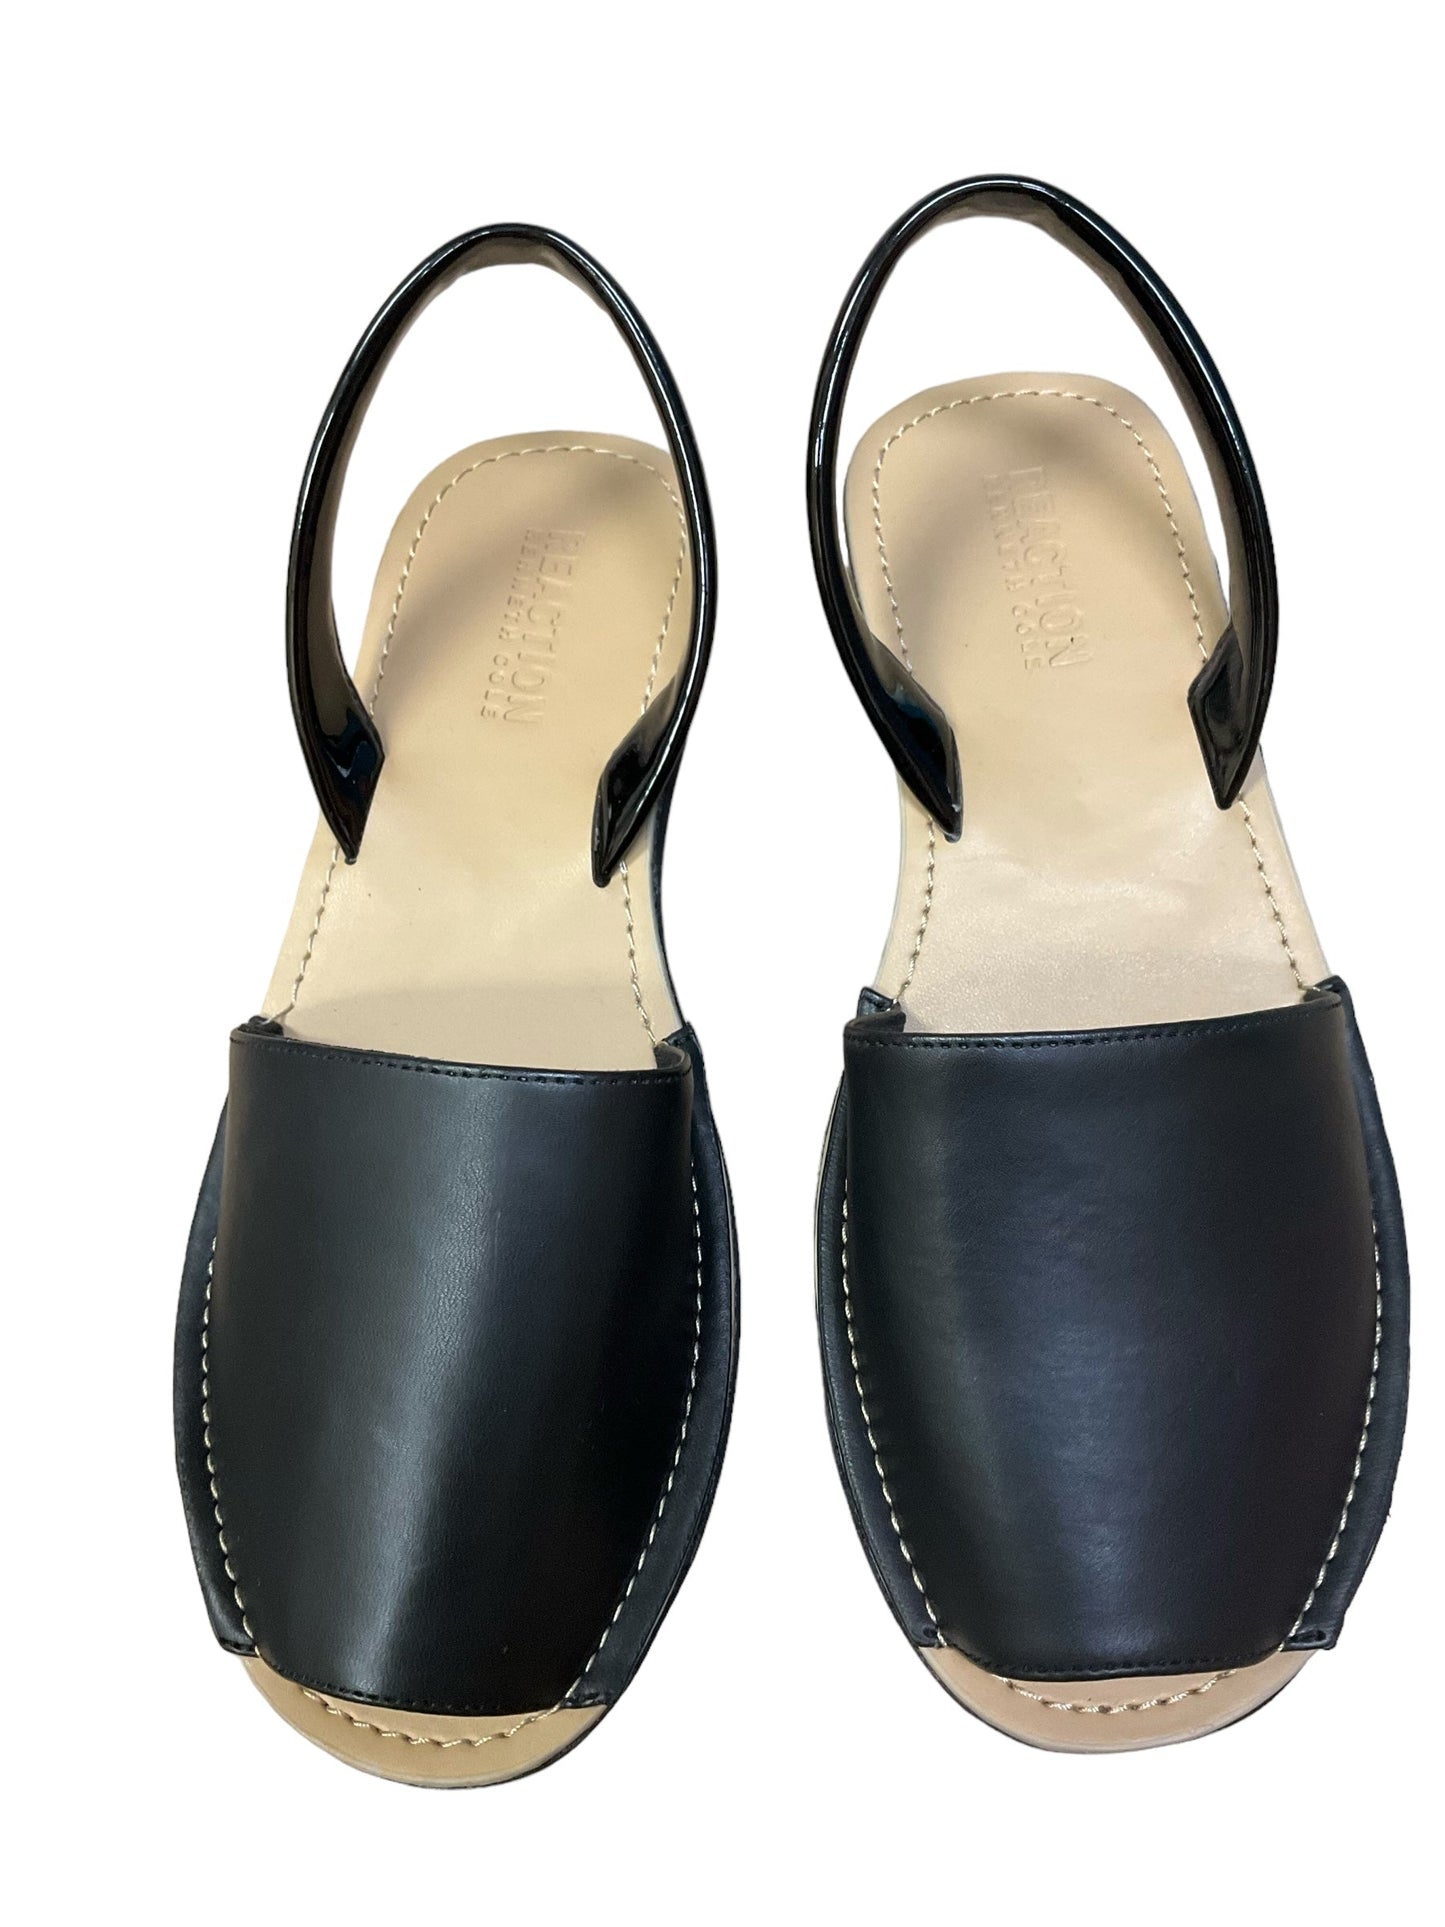 Black Sandals Heels Wedge Kenneth Cole Reaction, Size 6.5